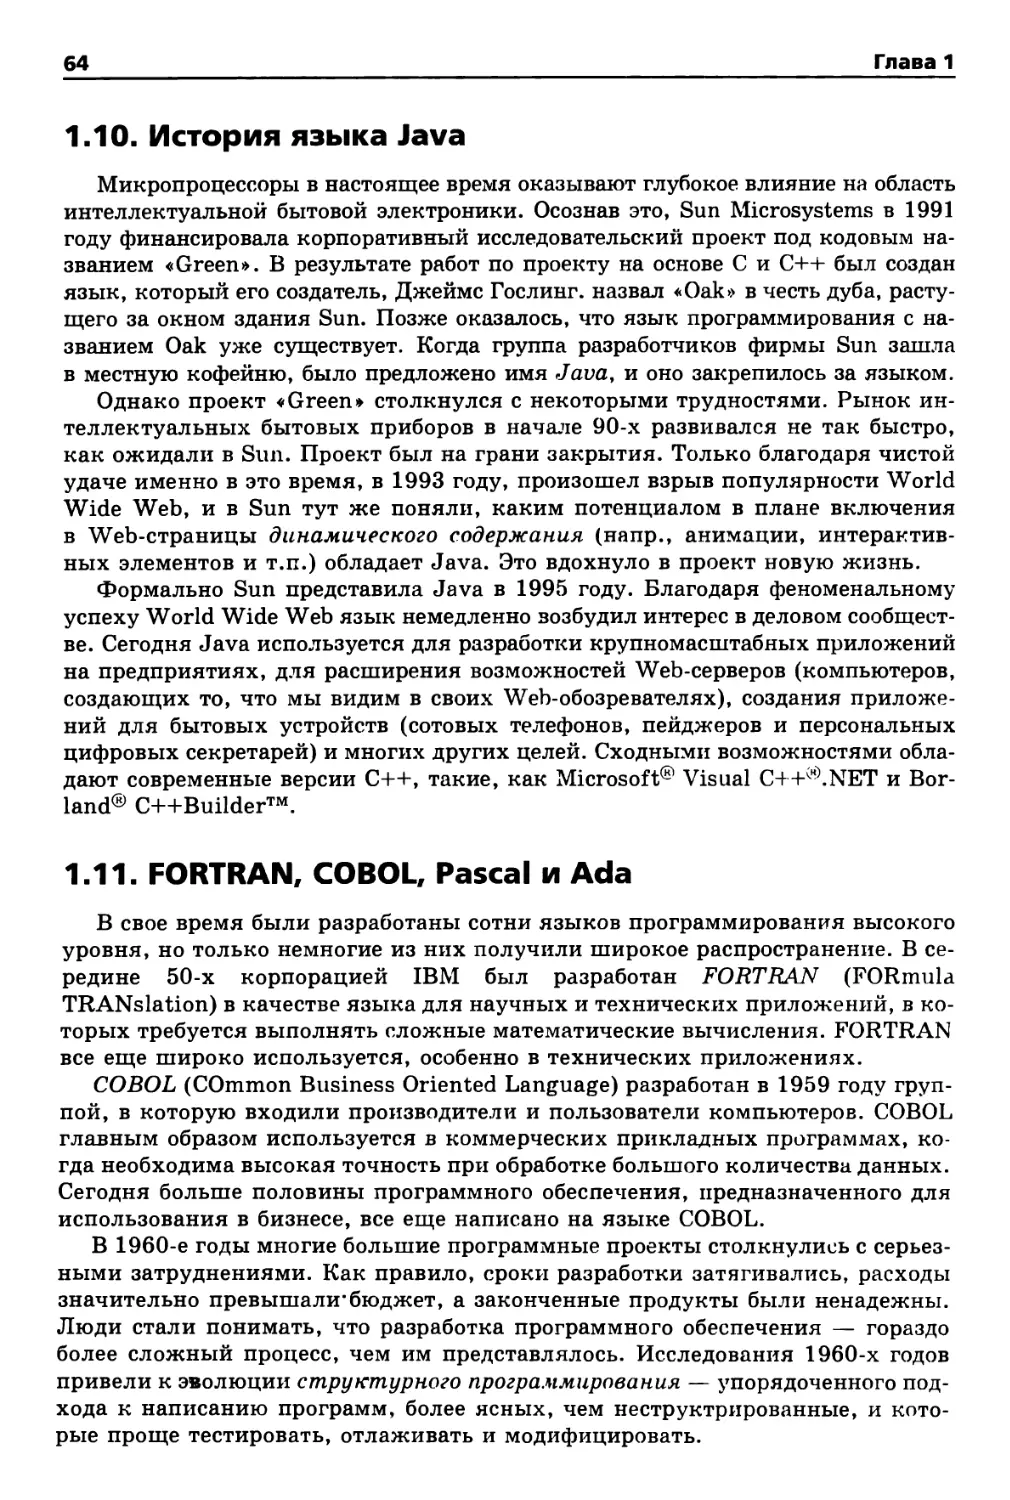 1.10. История языка Java
1.11. FORTRAN, COBOL, Pascal и Ada